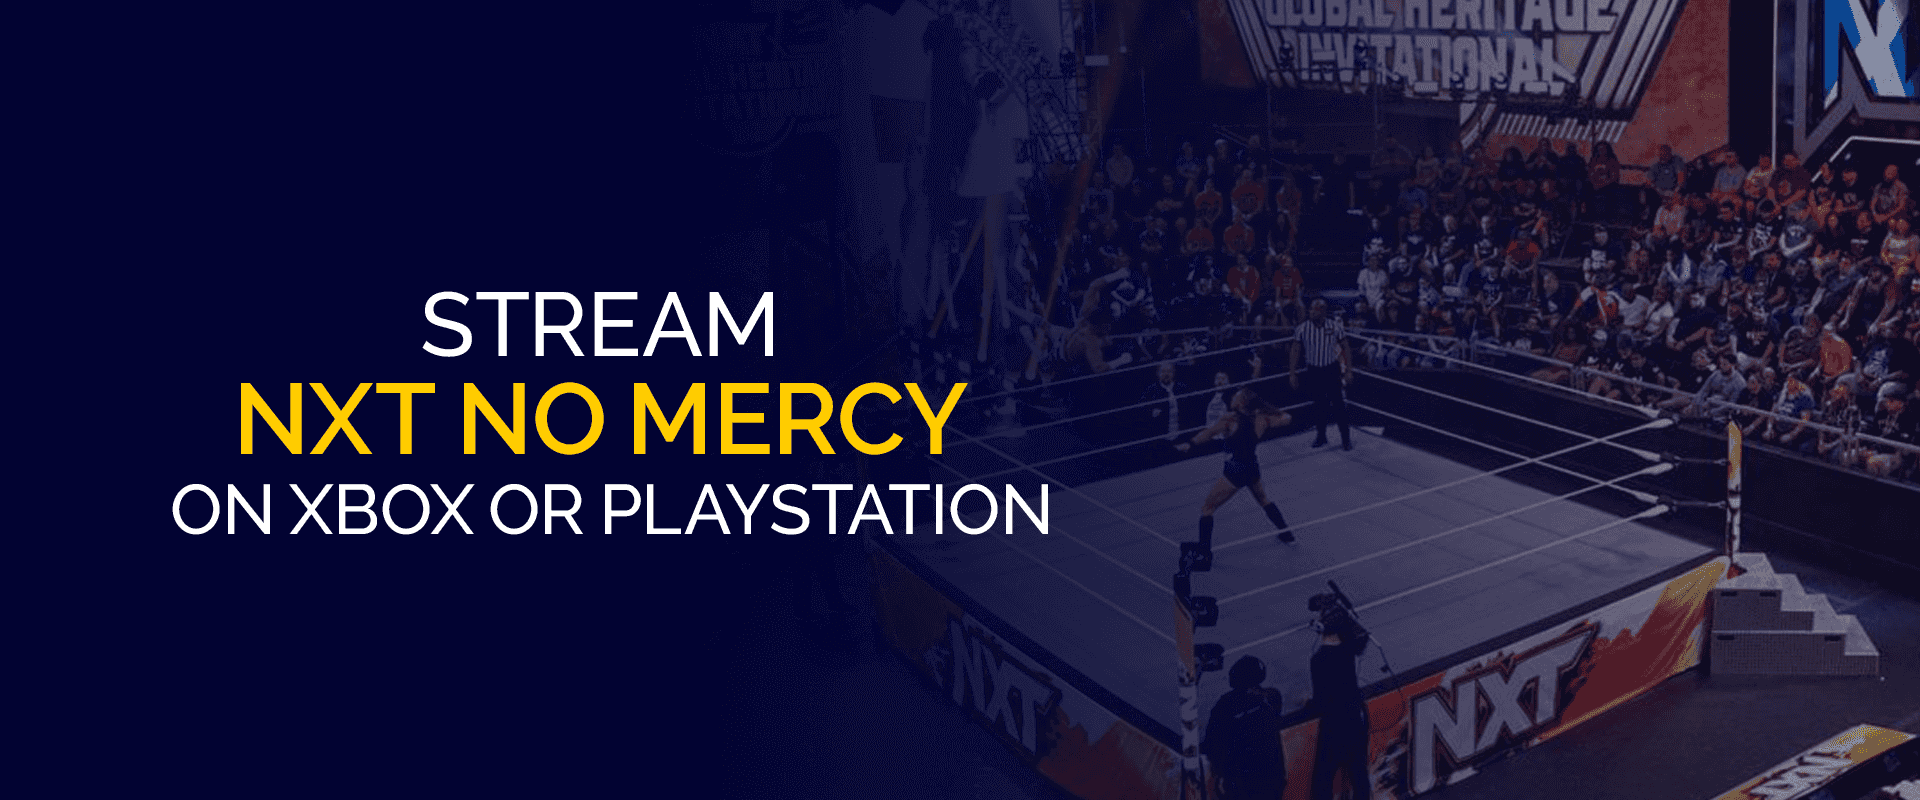 Transmita NXT No Mercy en Xbox o PlayStation